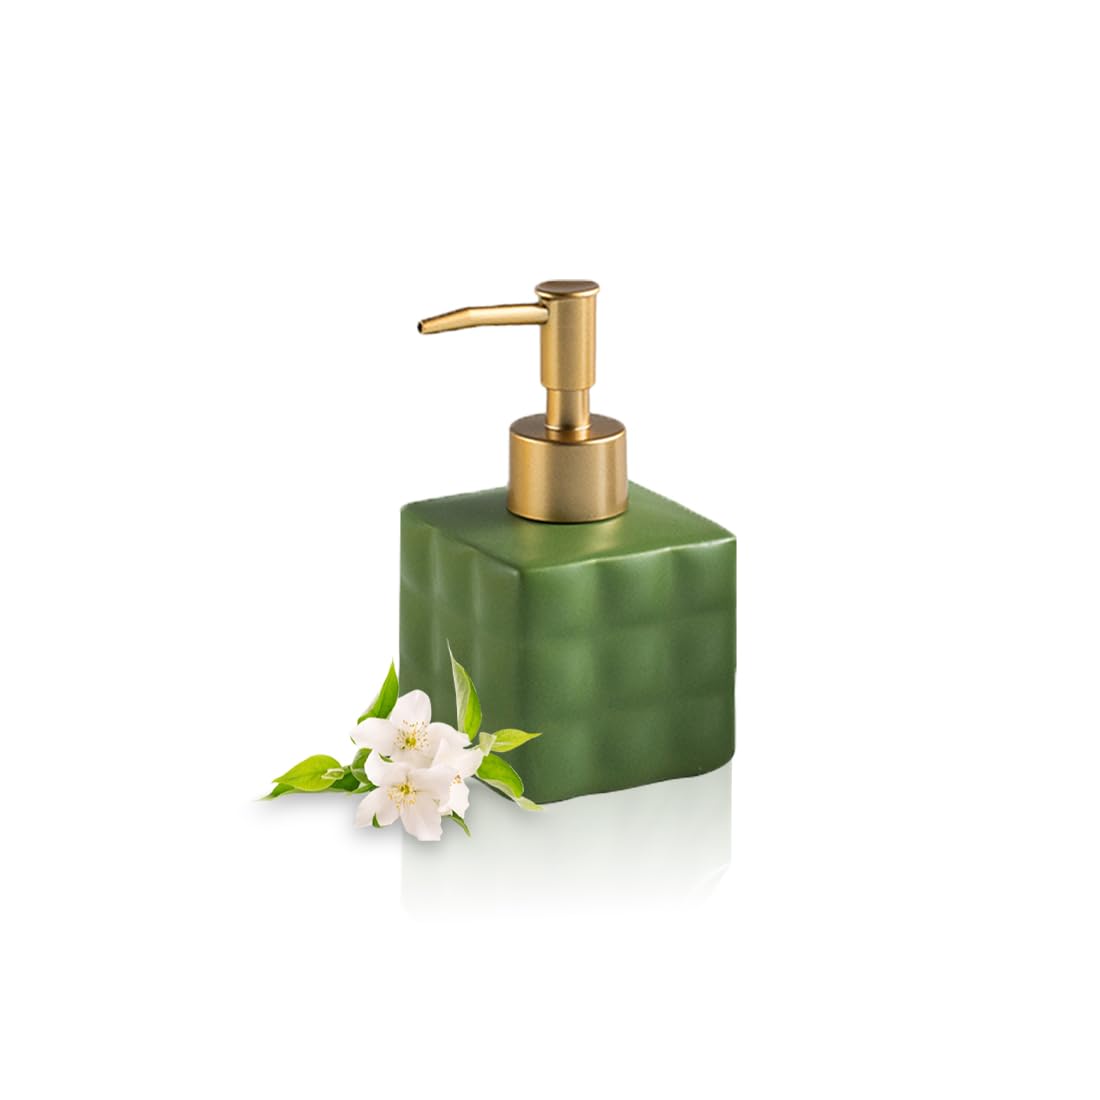 Ekhasa Ceramic Handwash Dispenser Bottle (220ml) (Green) | Liquid Soap Dispenser for Bathroom, Wash Basin and Kitchen | Bathroom Sanitizer, Lotion, Shampoo Dispenser | Hand Wash Dispensers Pump